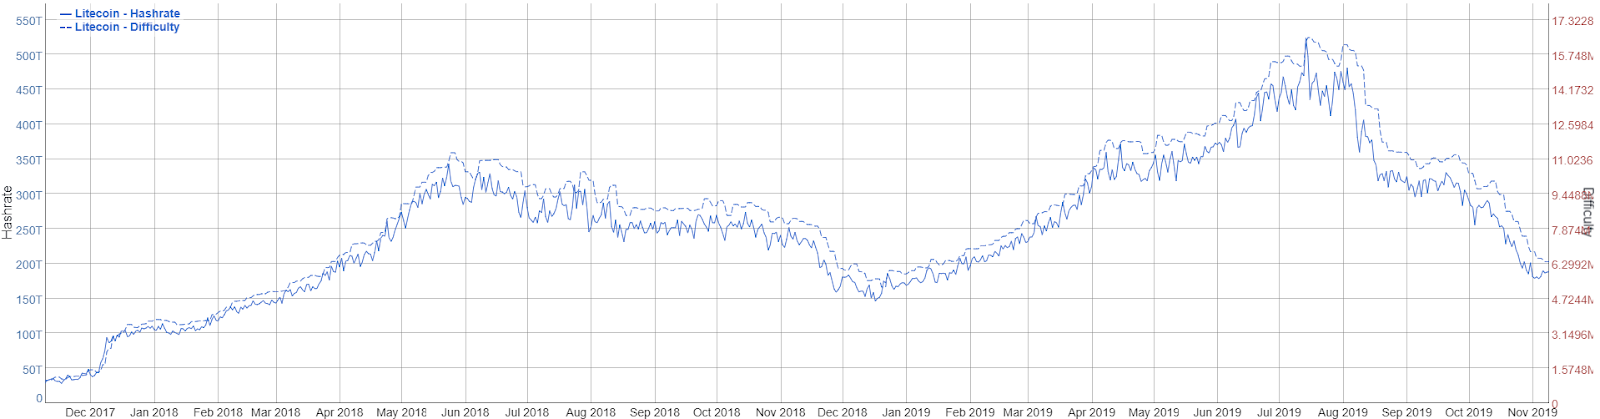 Litecoin Price History Chart